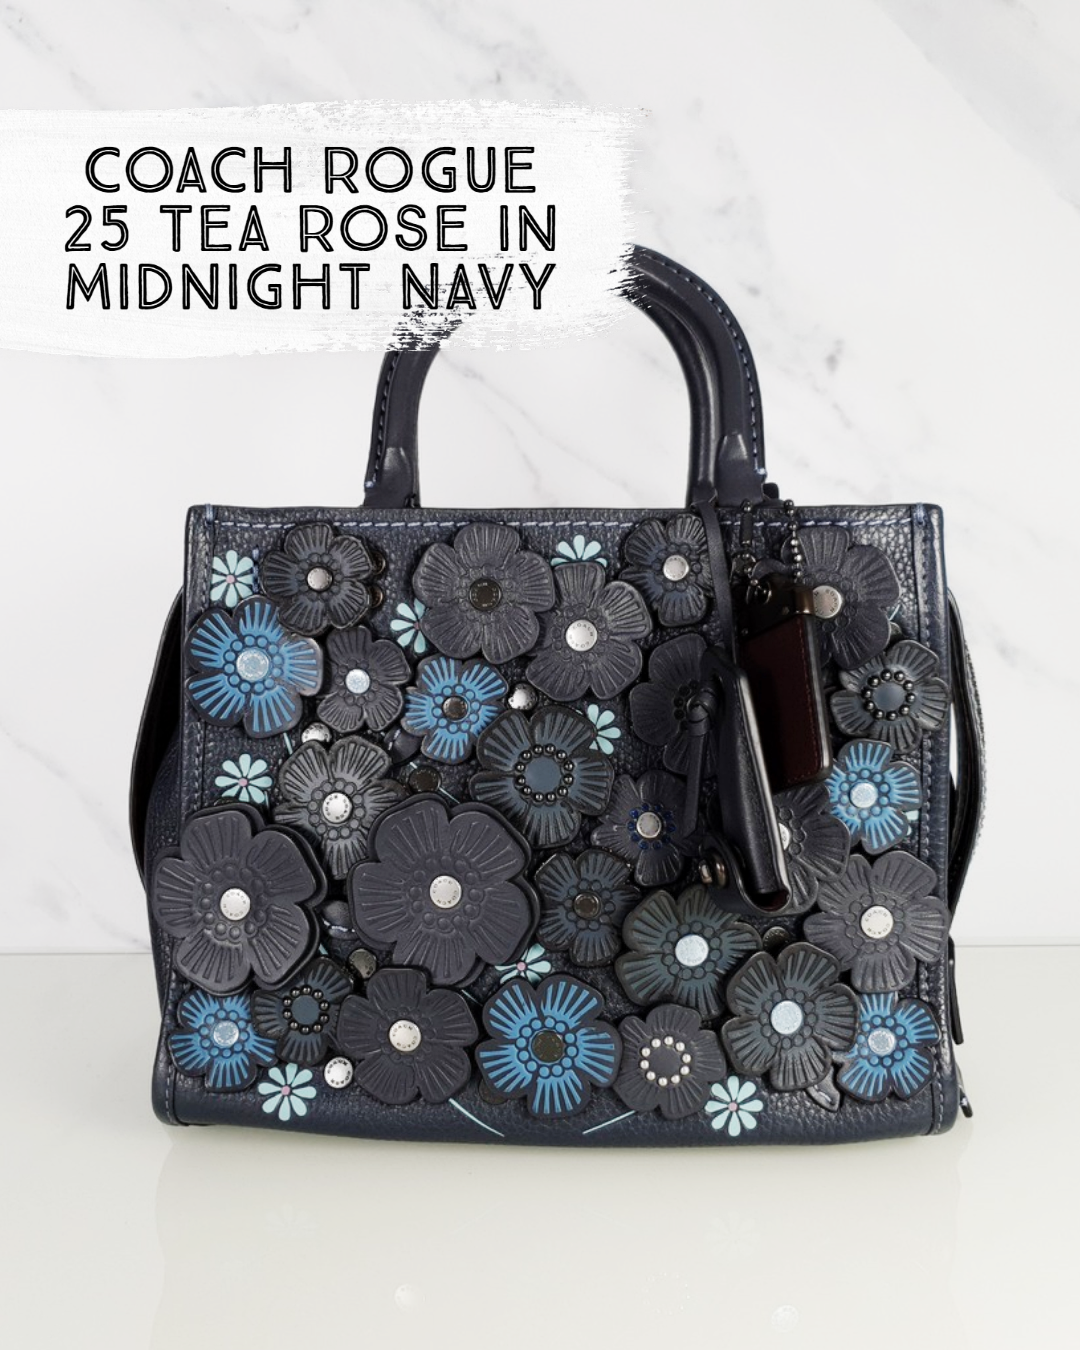 Coach Rogue 25 Tea Rose in Midnight Navy - Essex Fashion House